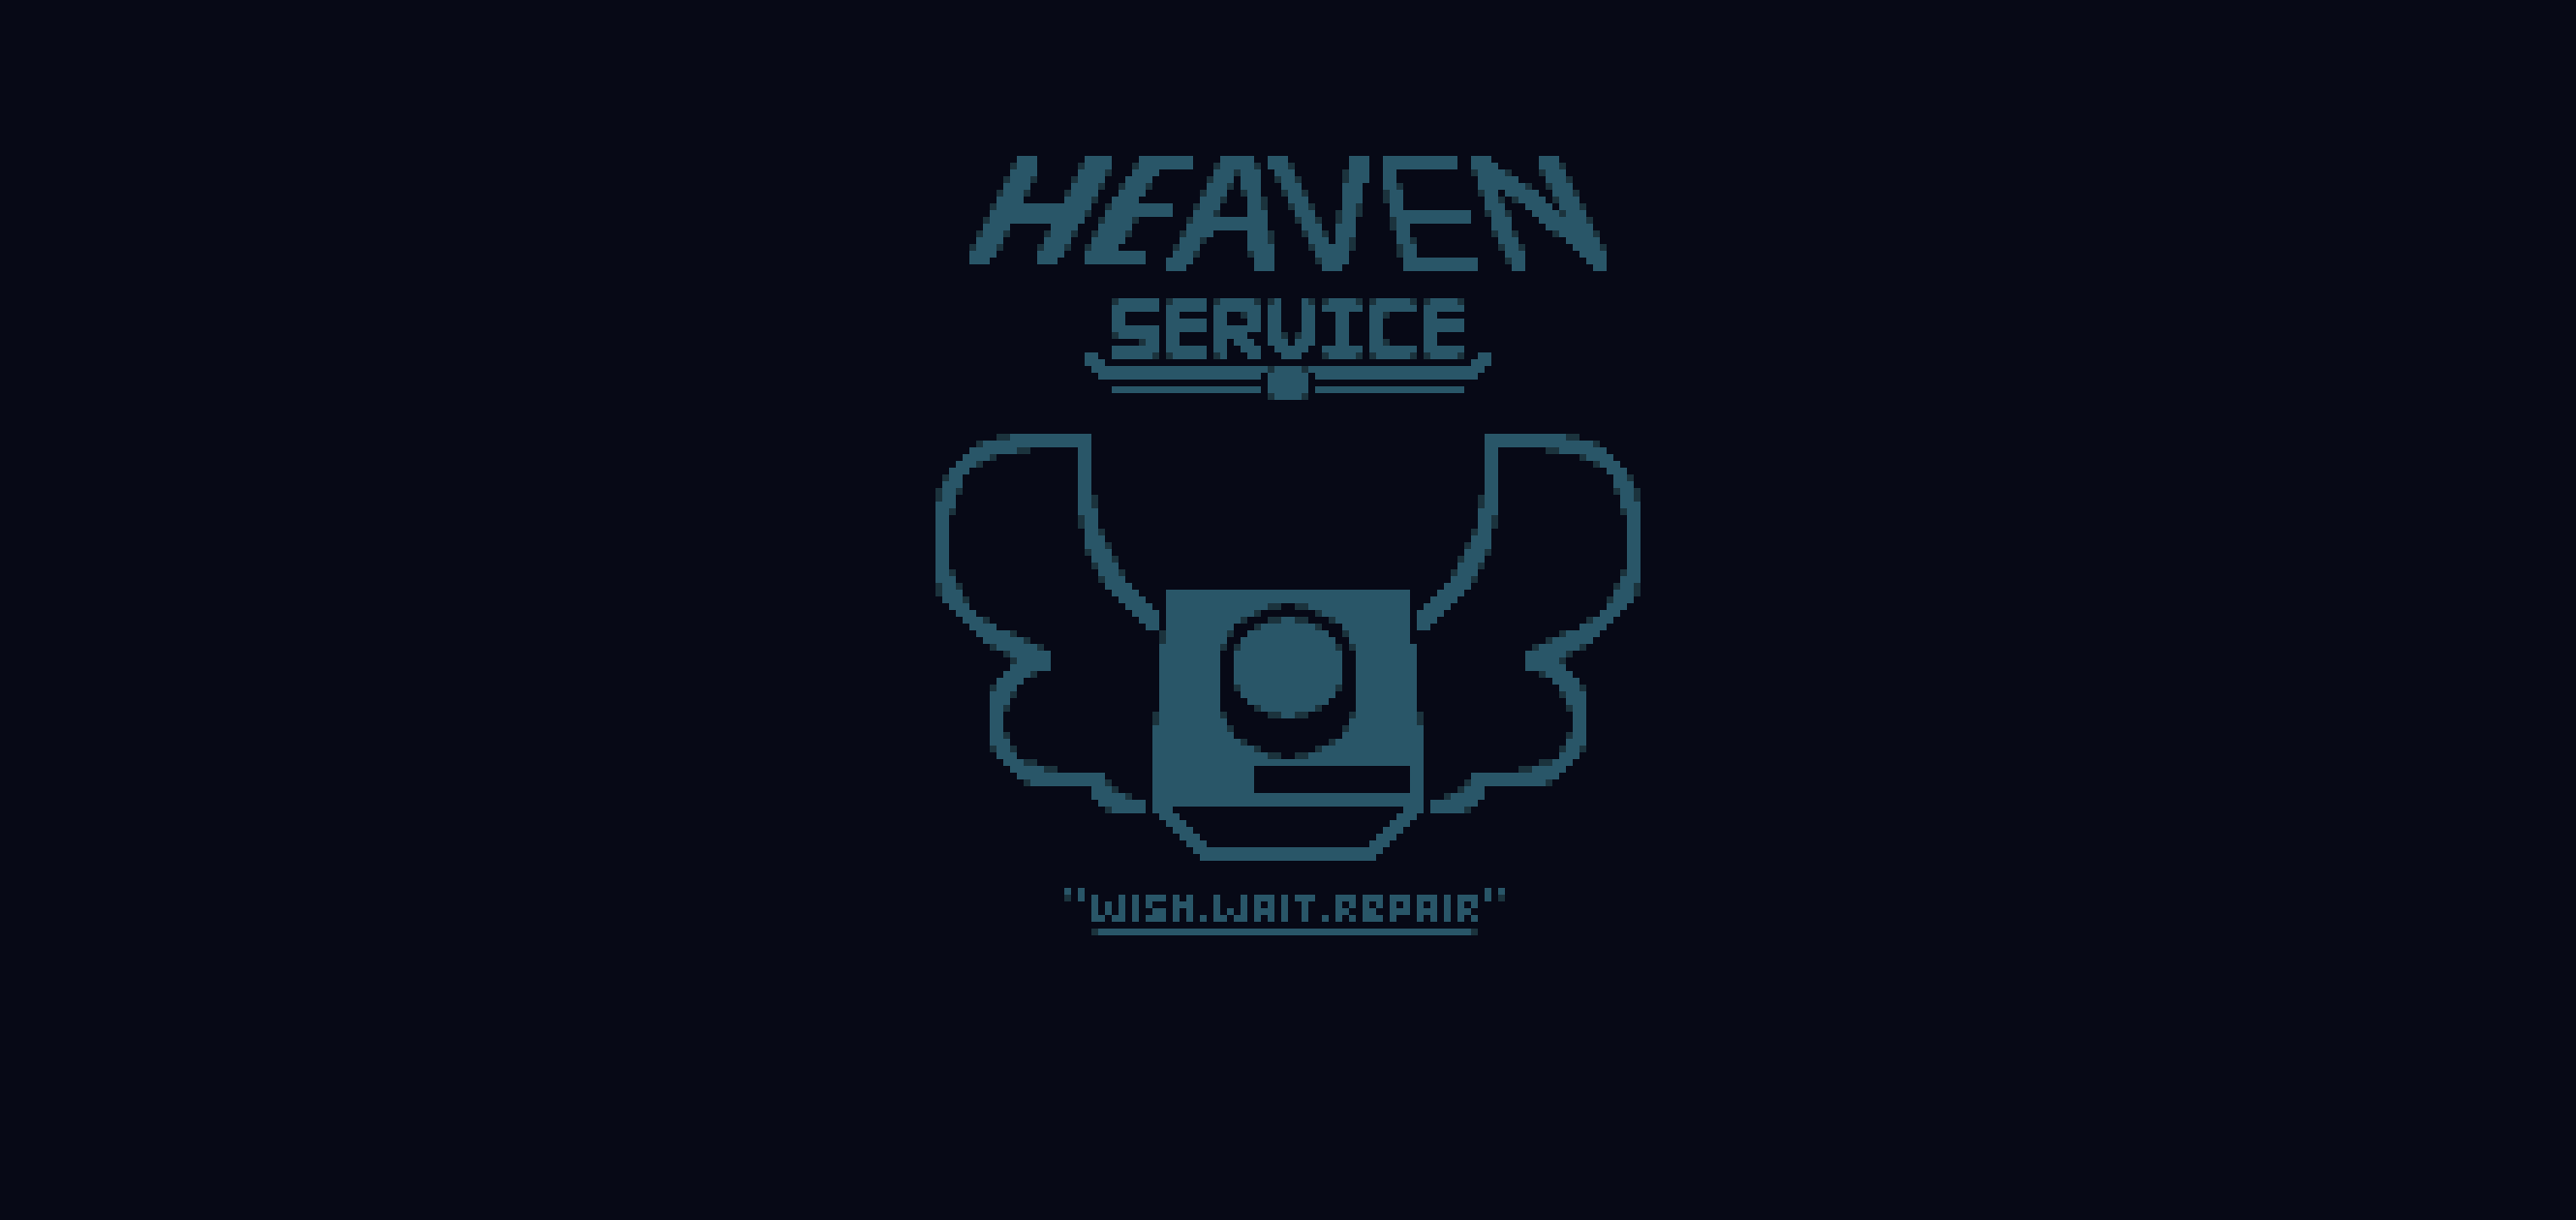 Heaven service - Wish.Wait.Repair